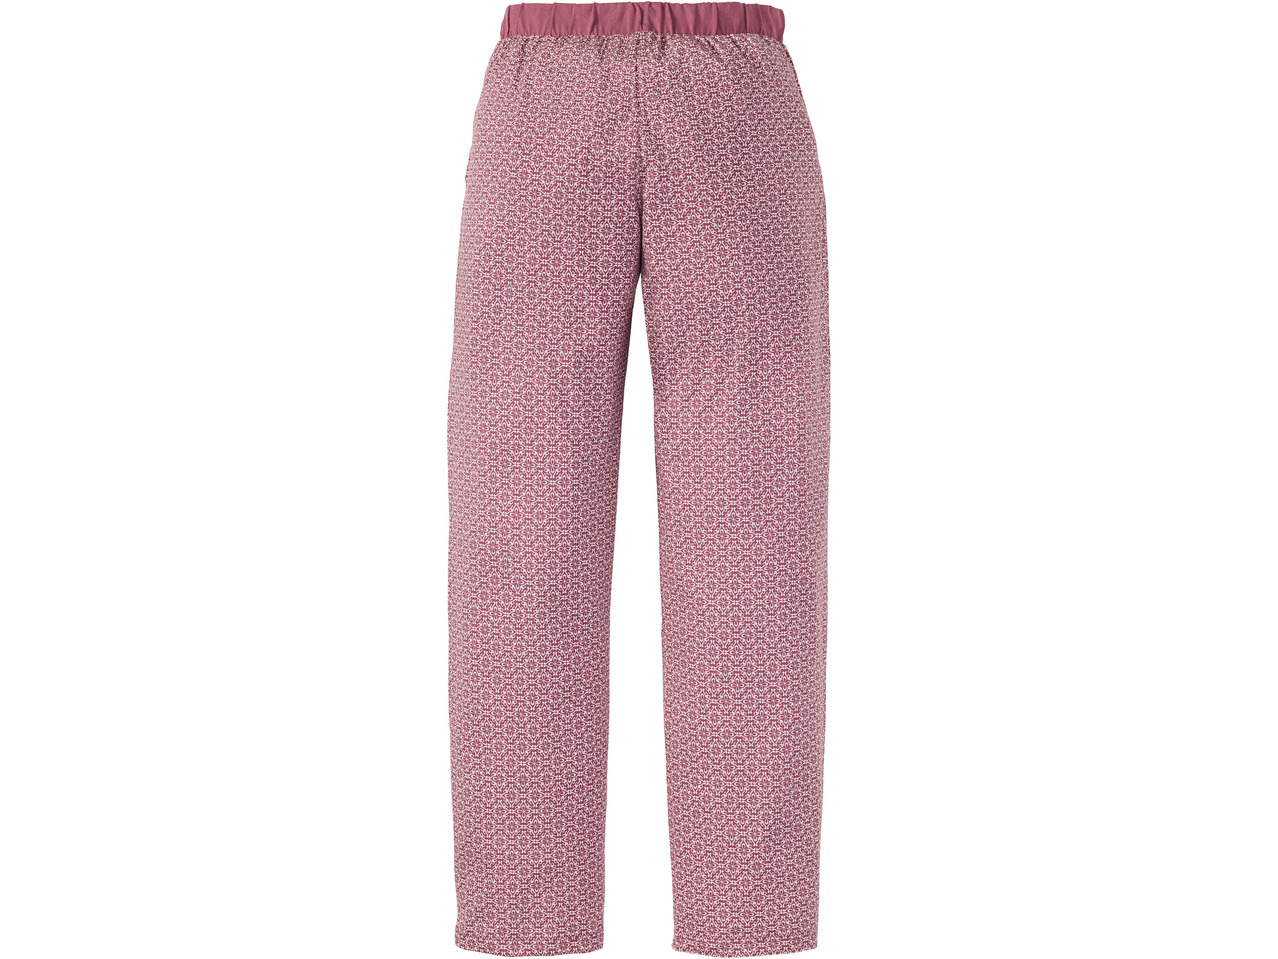 ESMARA LINGERIE/LIVERGY Ladies'/Men's Pyjamas